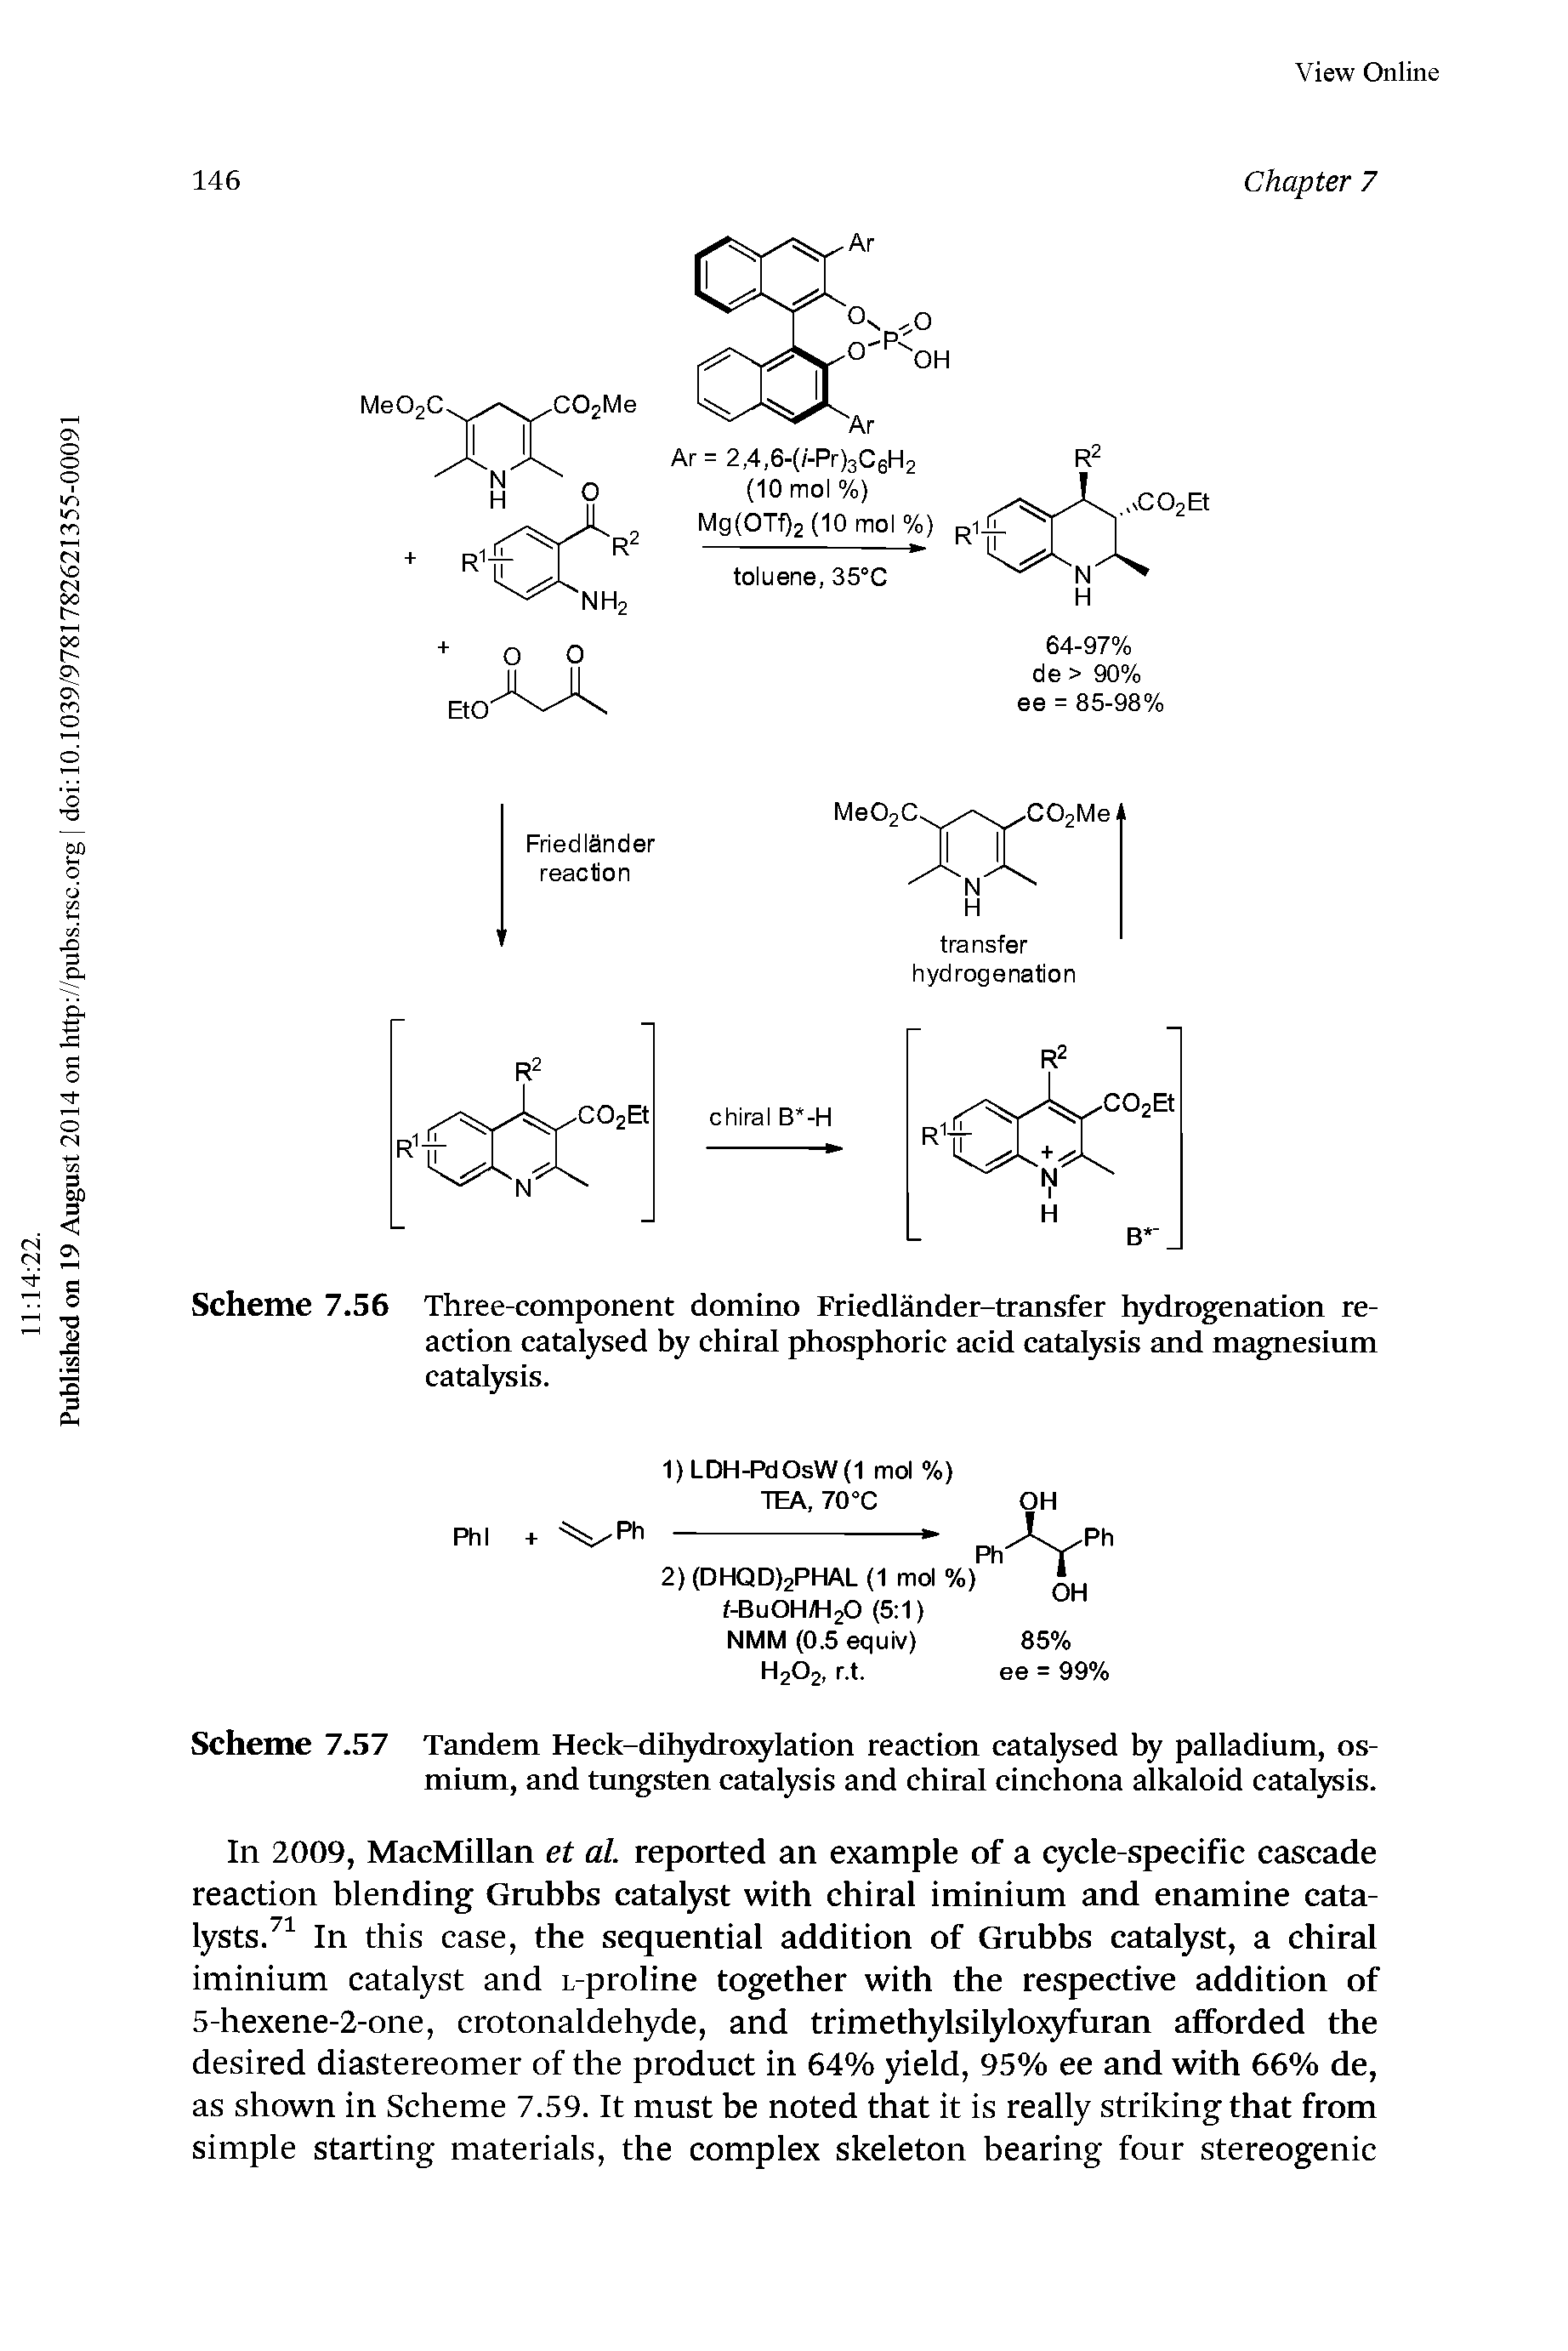 Scheme 7.56 Three-component domino Friedlander-transfer hydrogenation reaction catalysed by chiral phosphoric acid catalysis and magnesium catatysis.